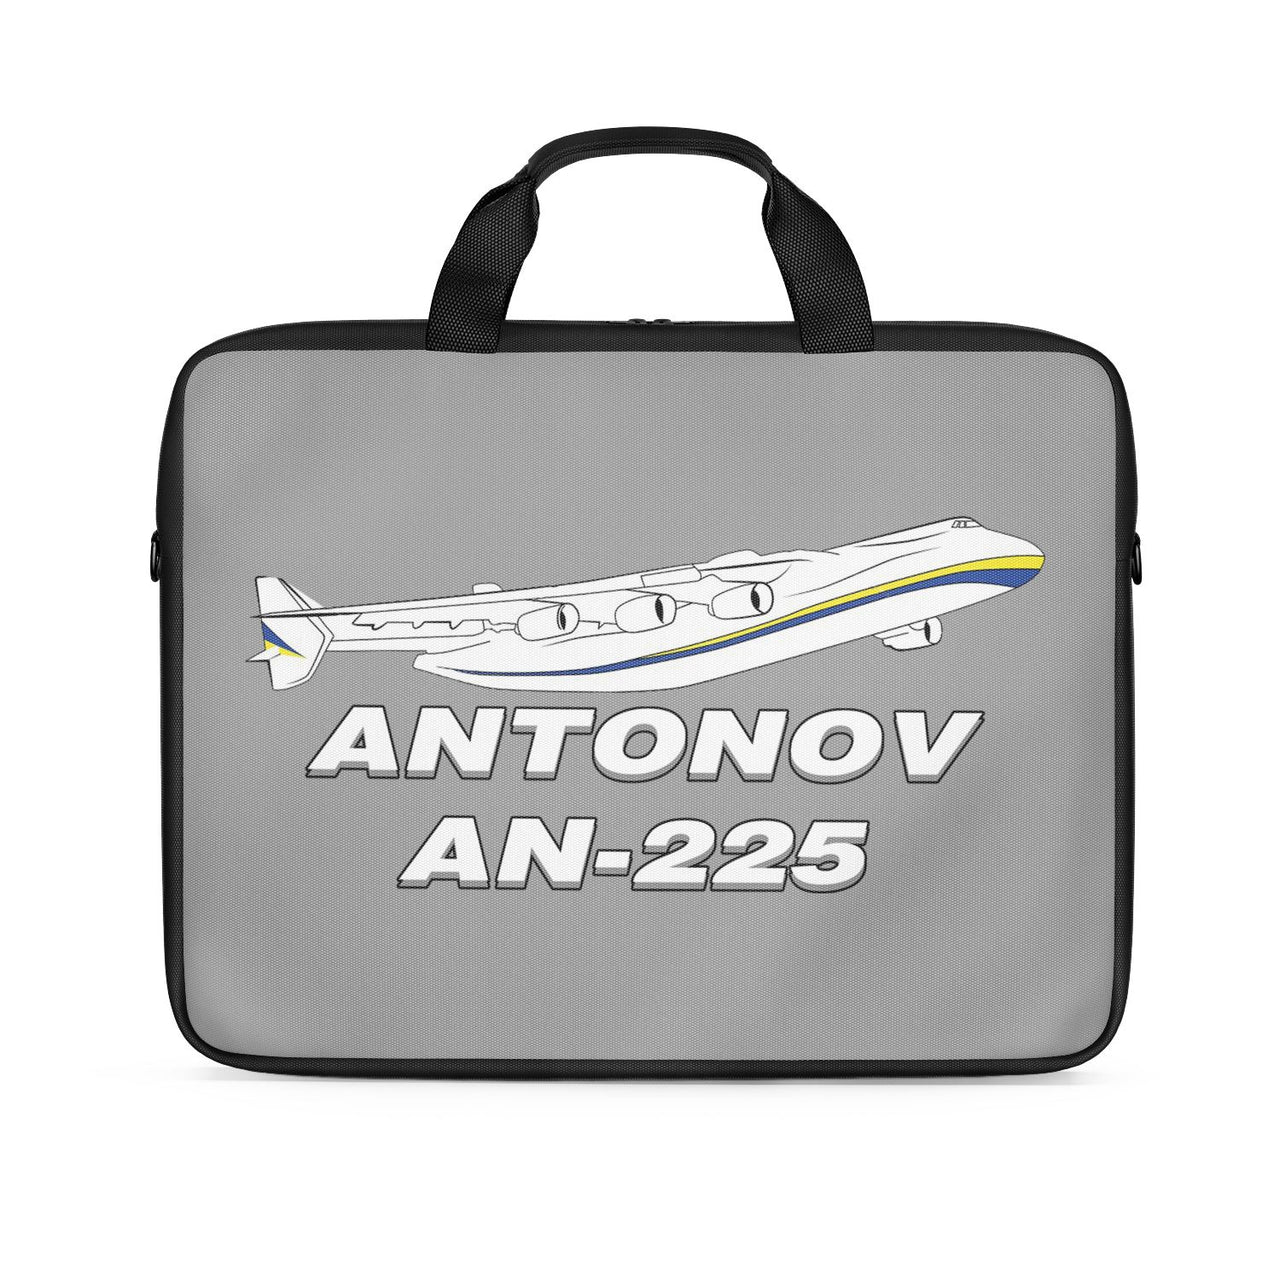 Antonov AN-225 (27) Designed Laptop & Tablet Bags